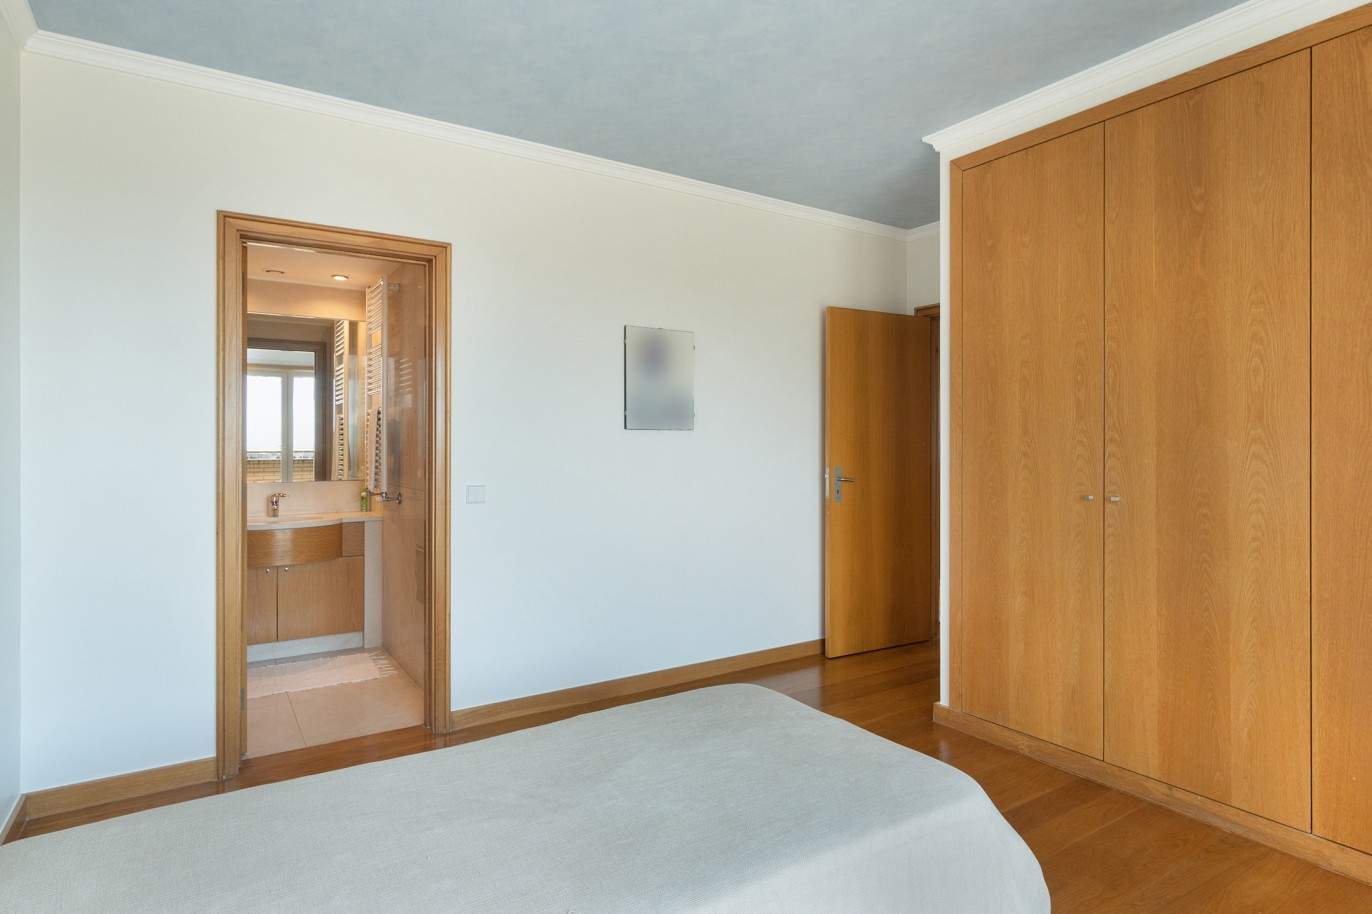 Piso dúplex de 5 dormitorios con vistas al mar, en venta, Pinhais da Foz, Porto, Portugal_203347